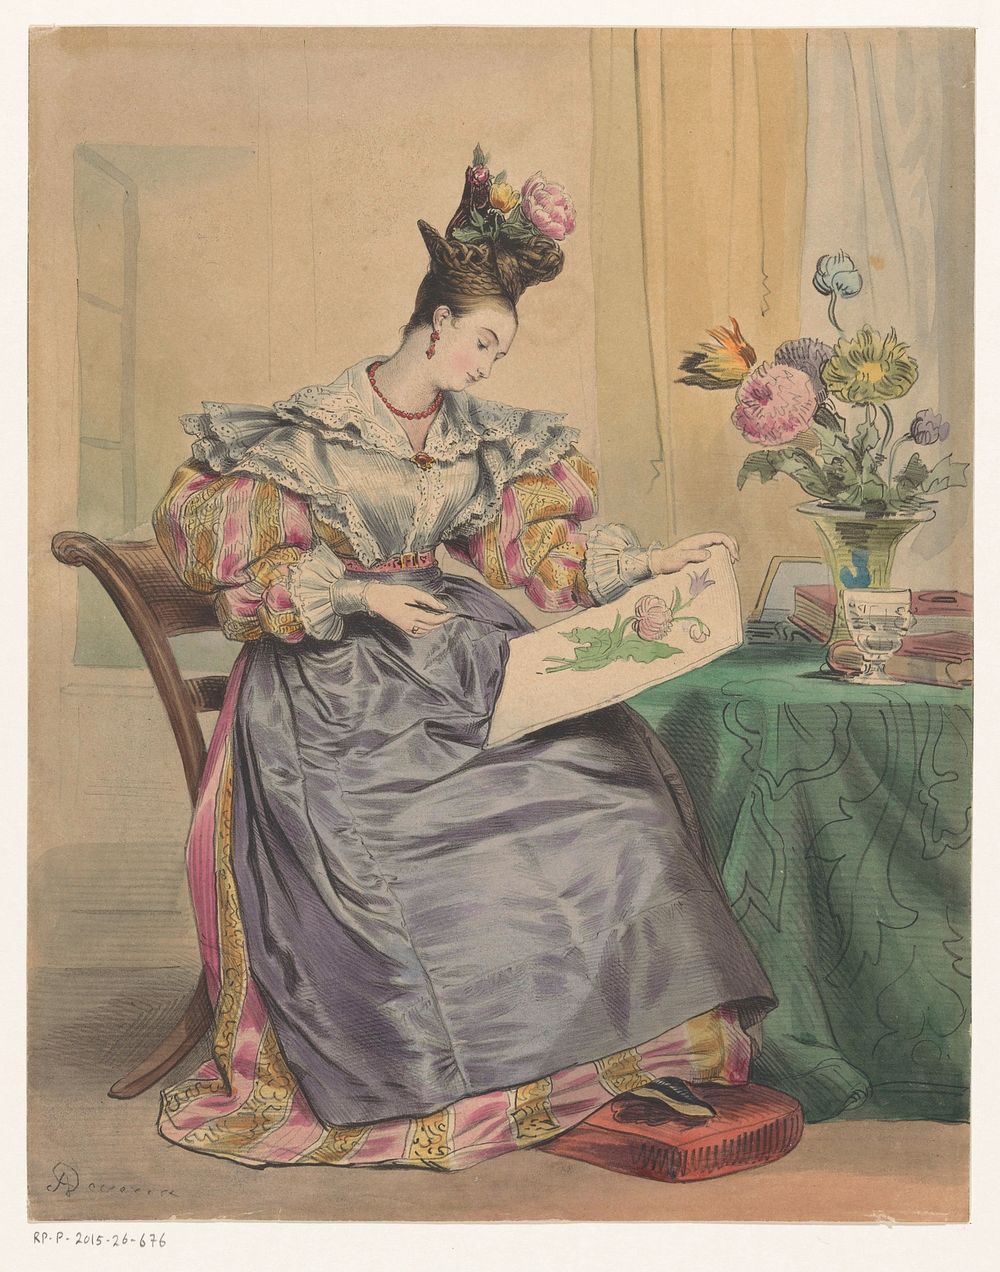 Vrouw kleurt een prent (c. 1830) by Achille Devéria and Antoine Catherine Adolphe Fonrouge